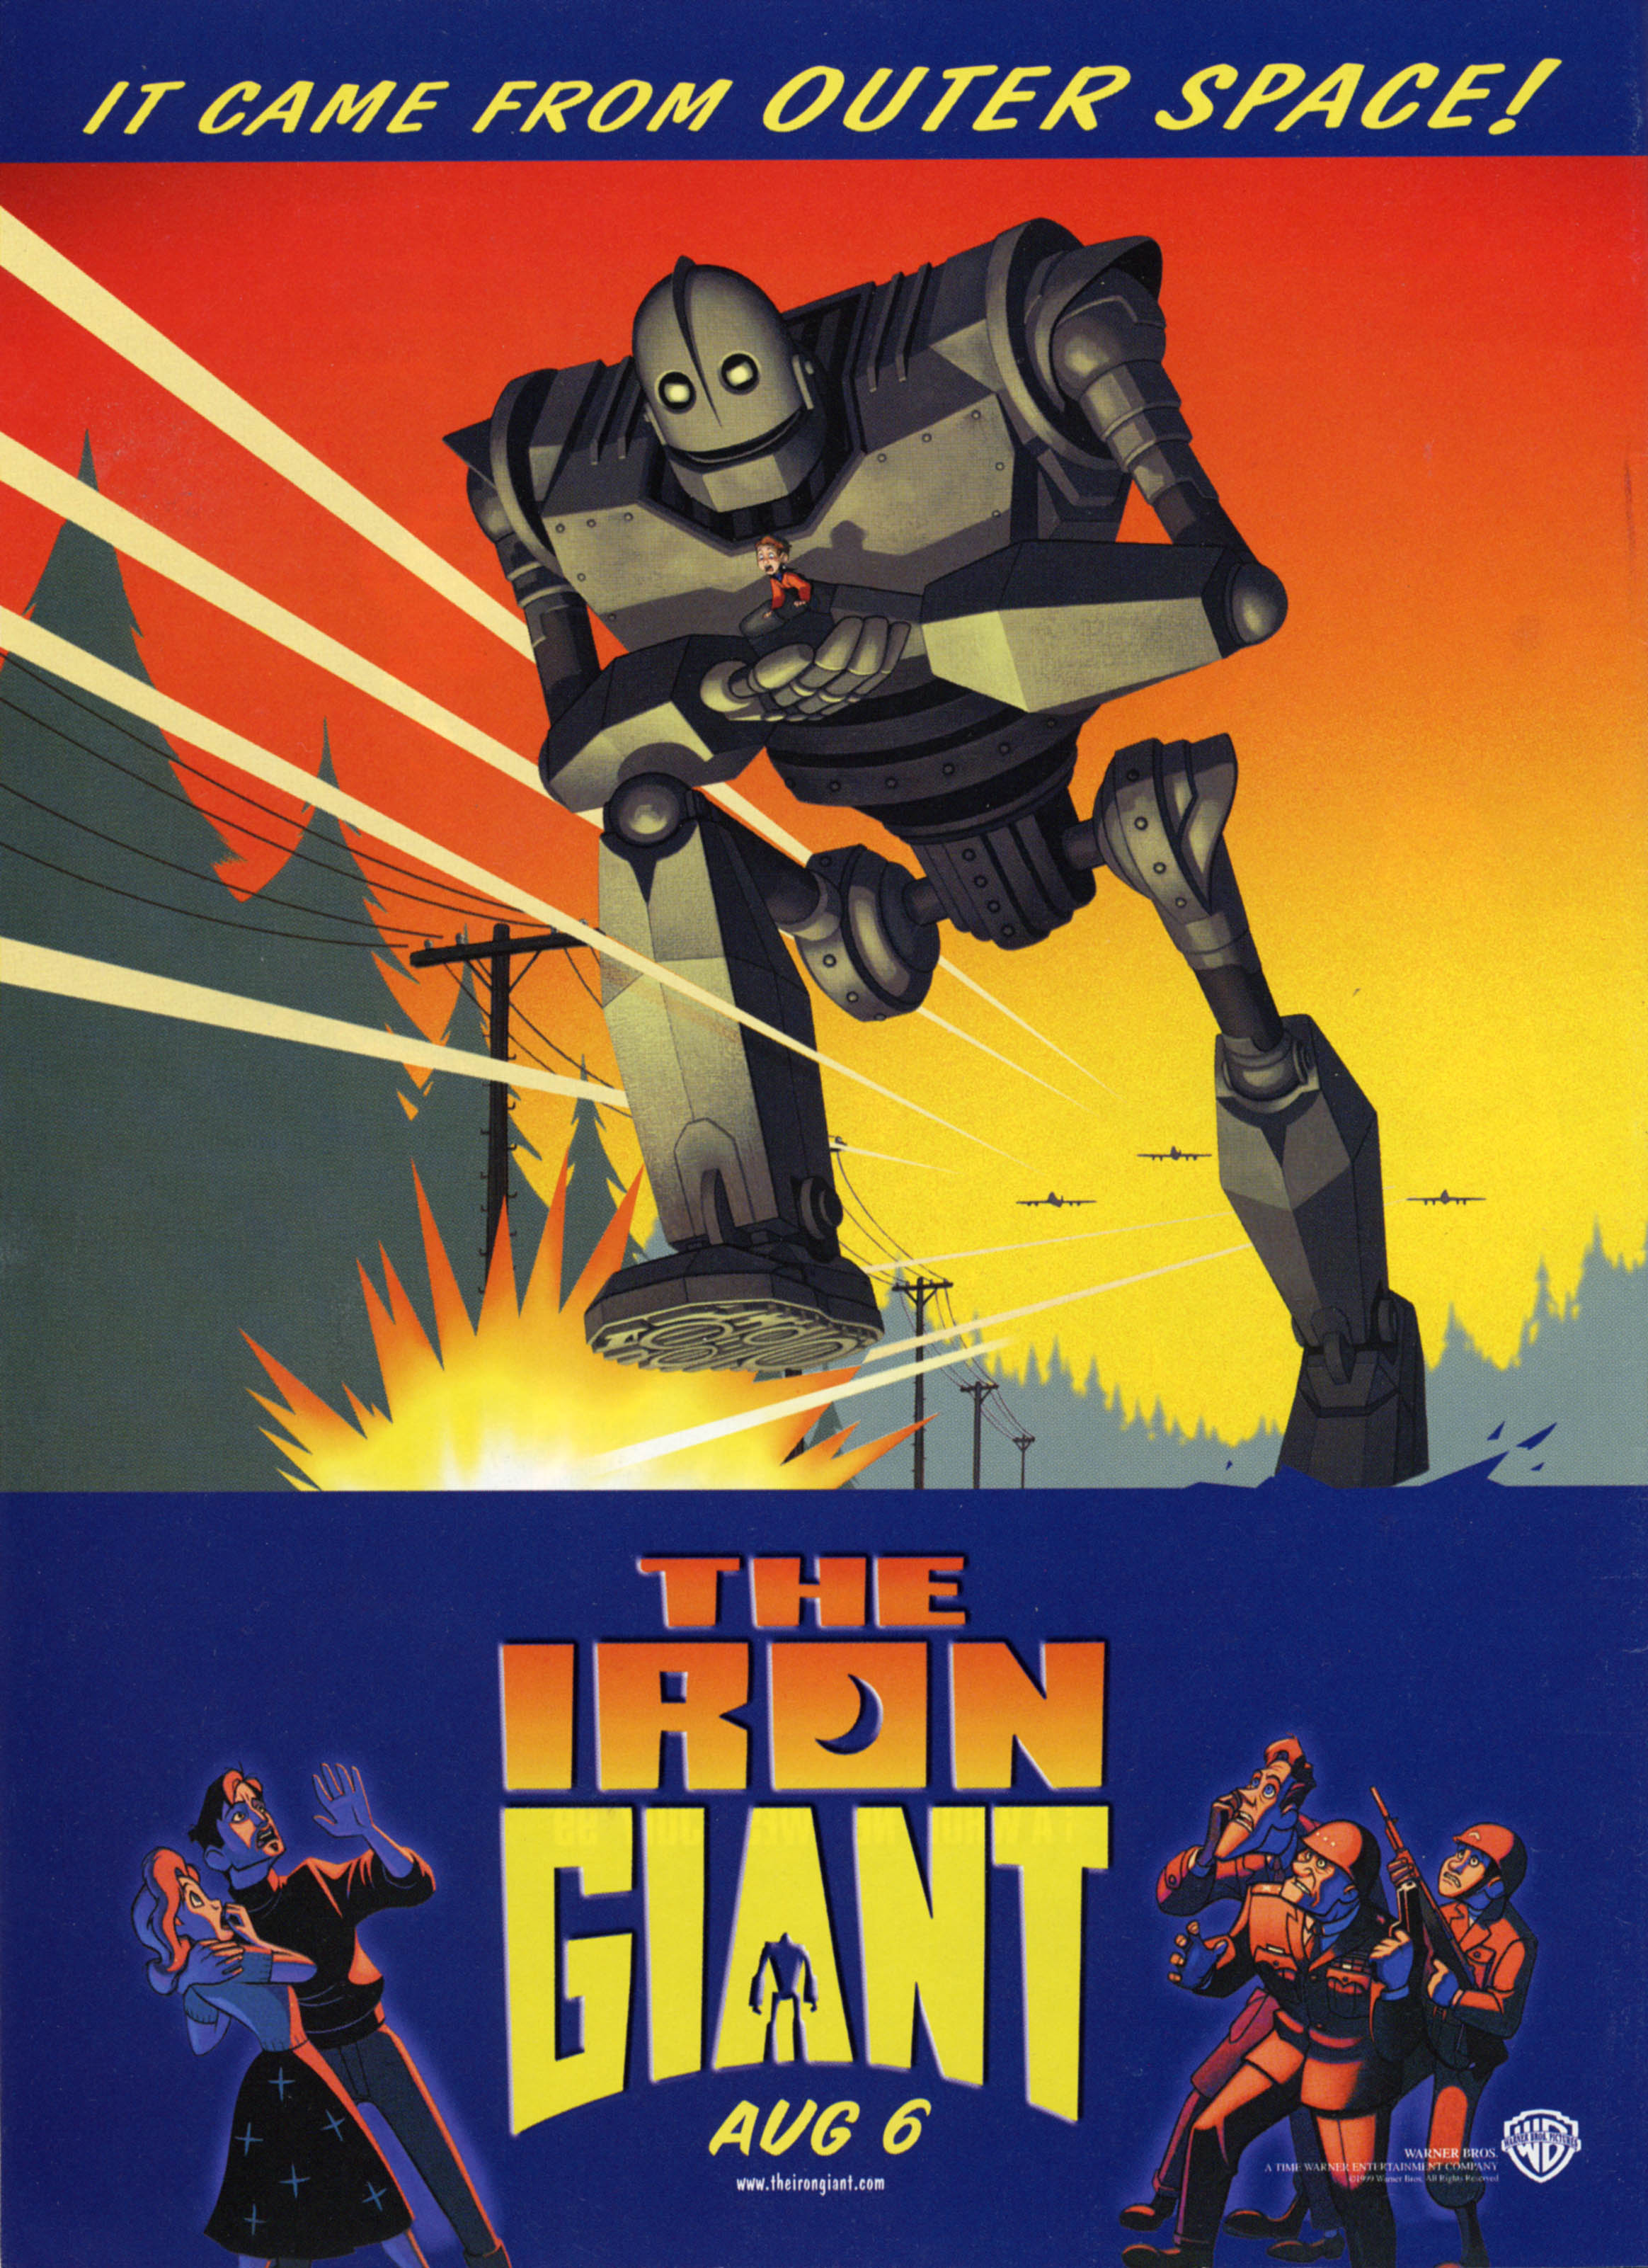 The Iron Giant Warner Bros image